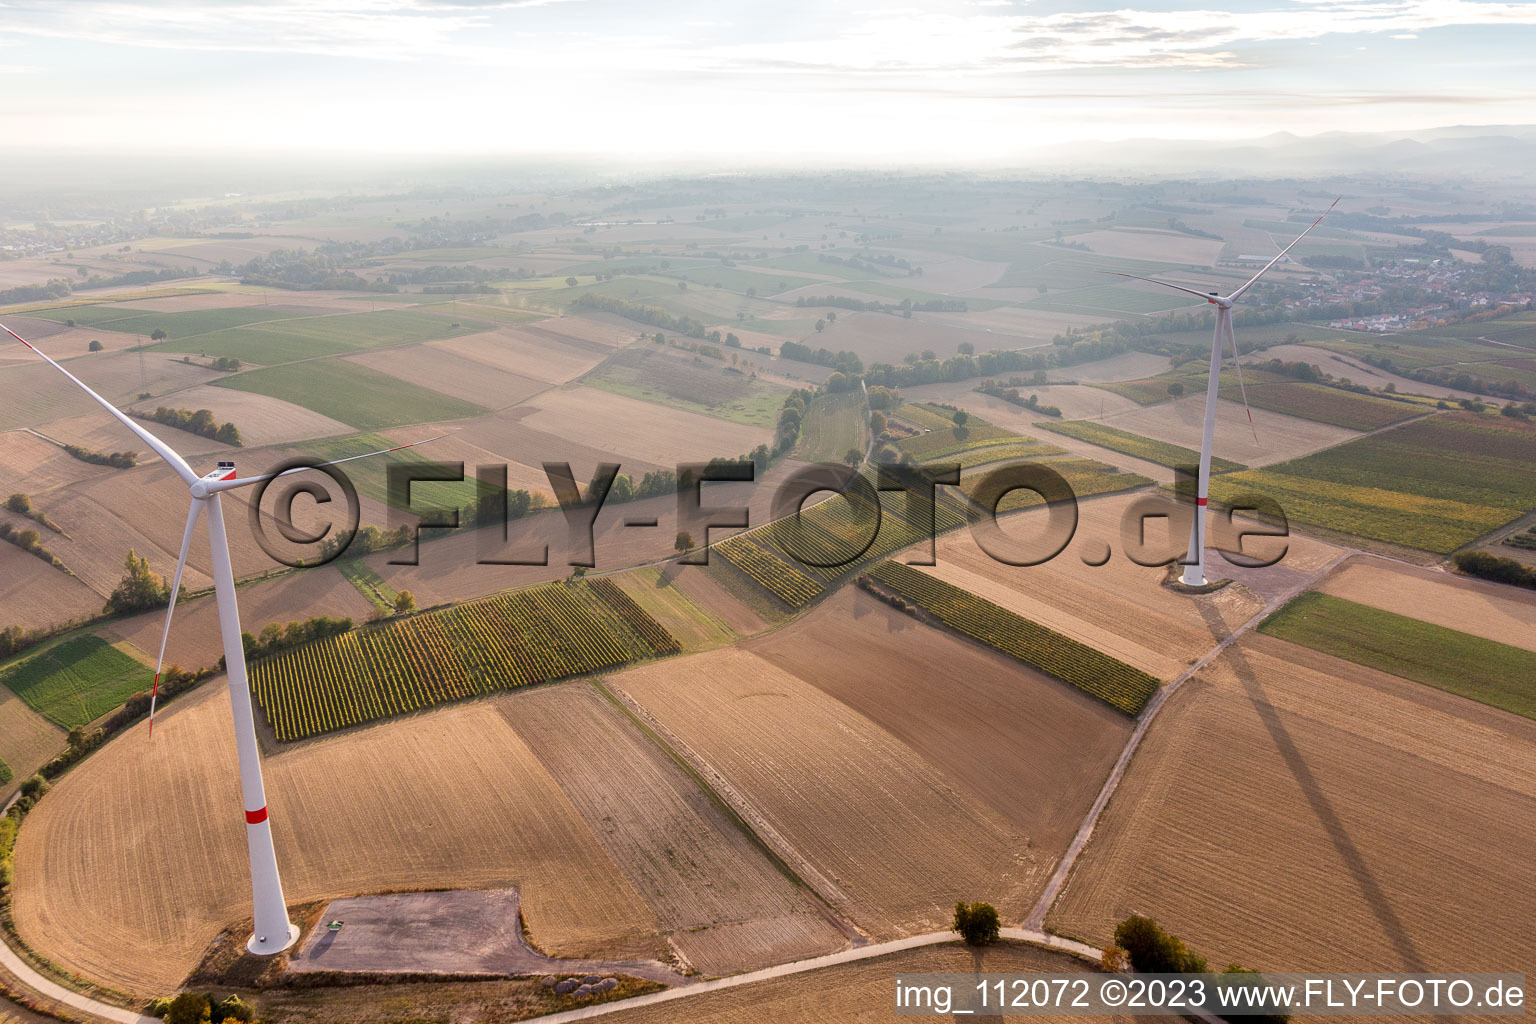 Bird's eye view of EnBW wind farm - wind turbine with 6 wind turbines in Freckenfeld in the state Rhineland-Palatinate, Germany